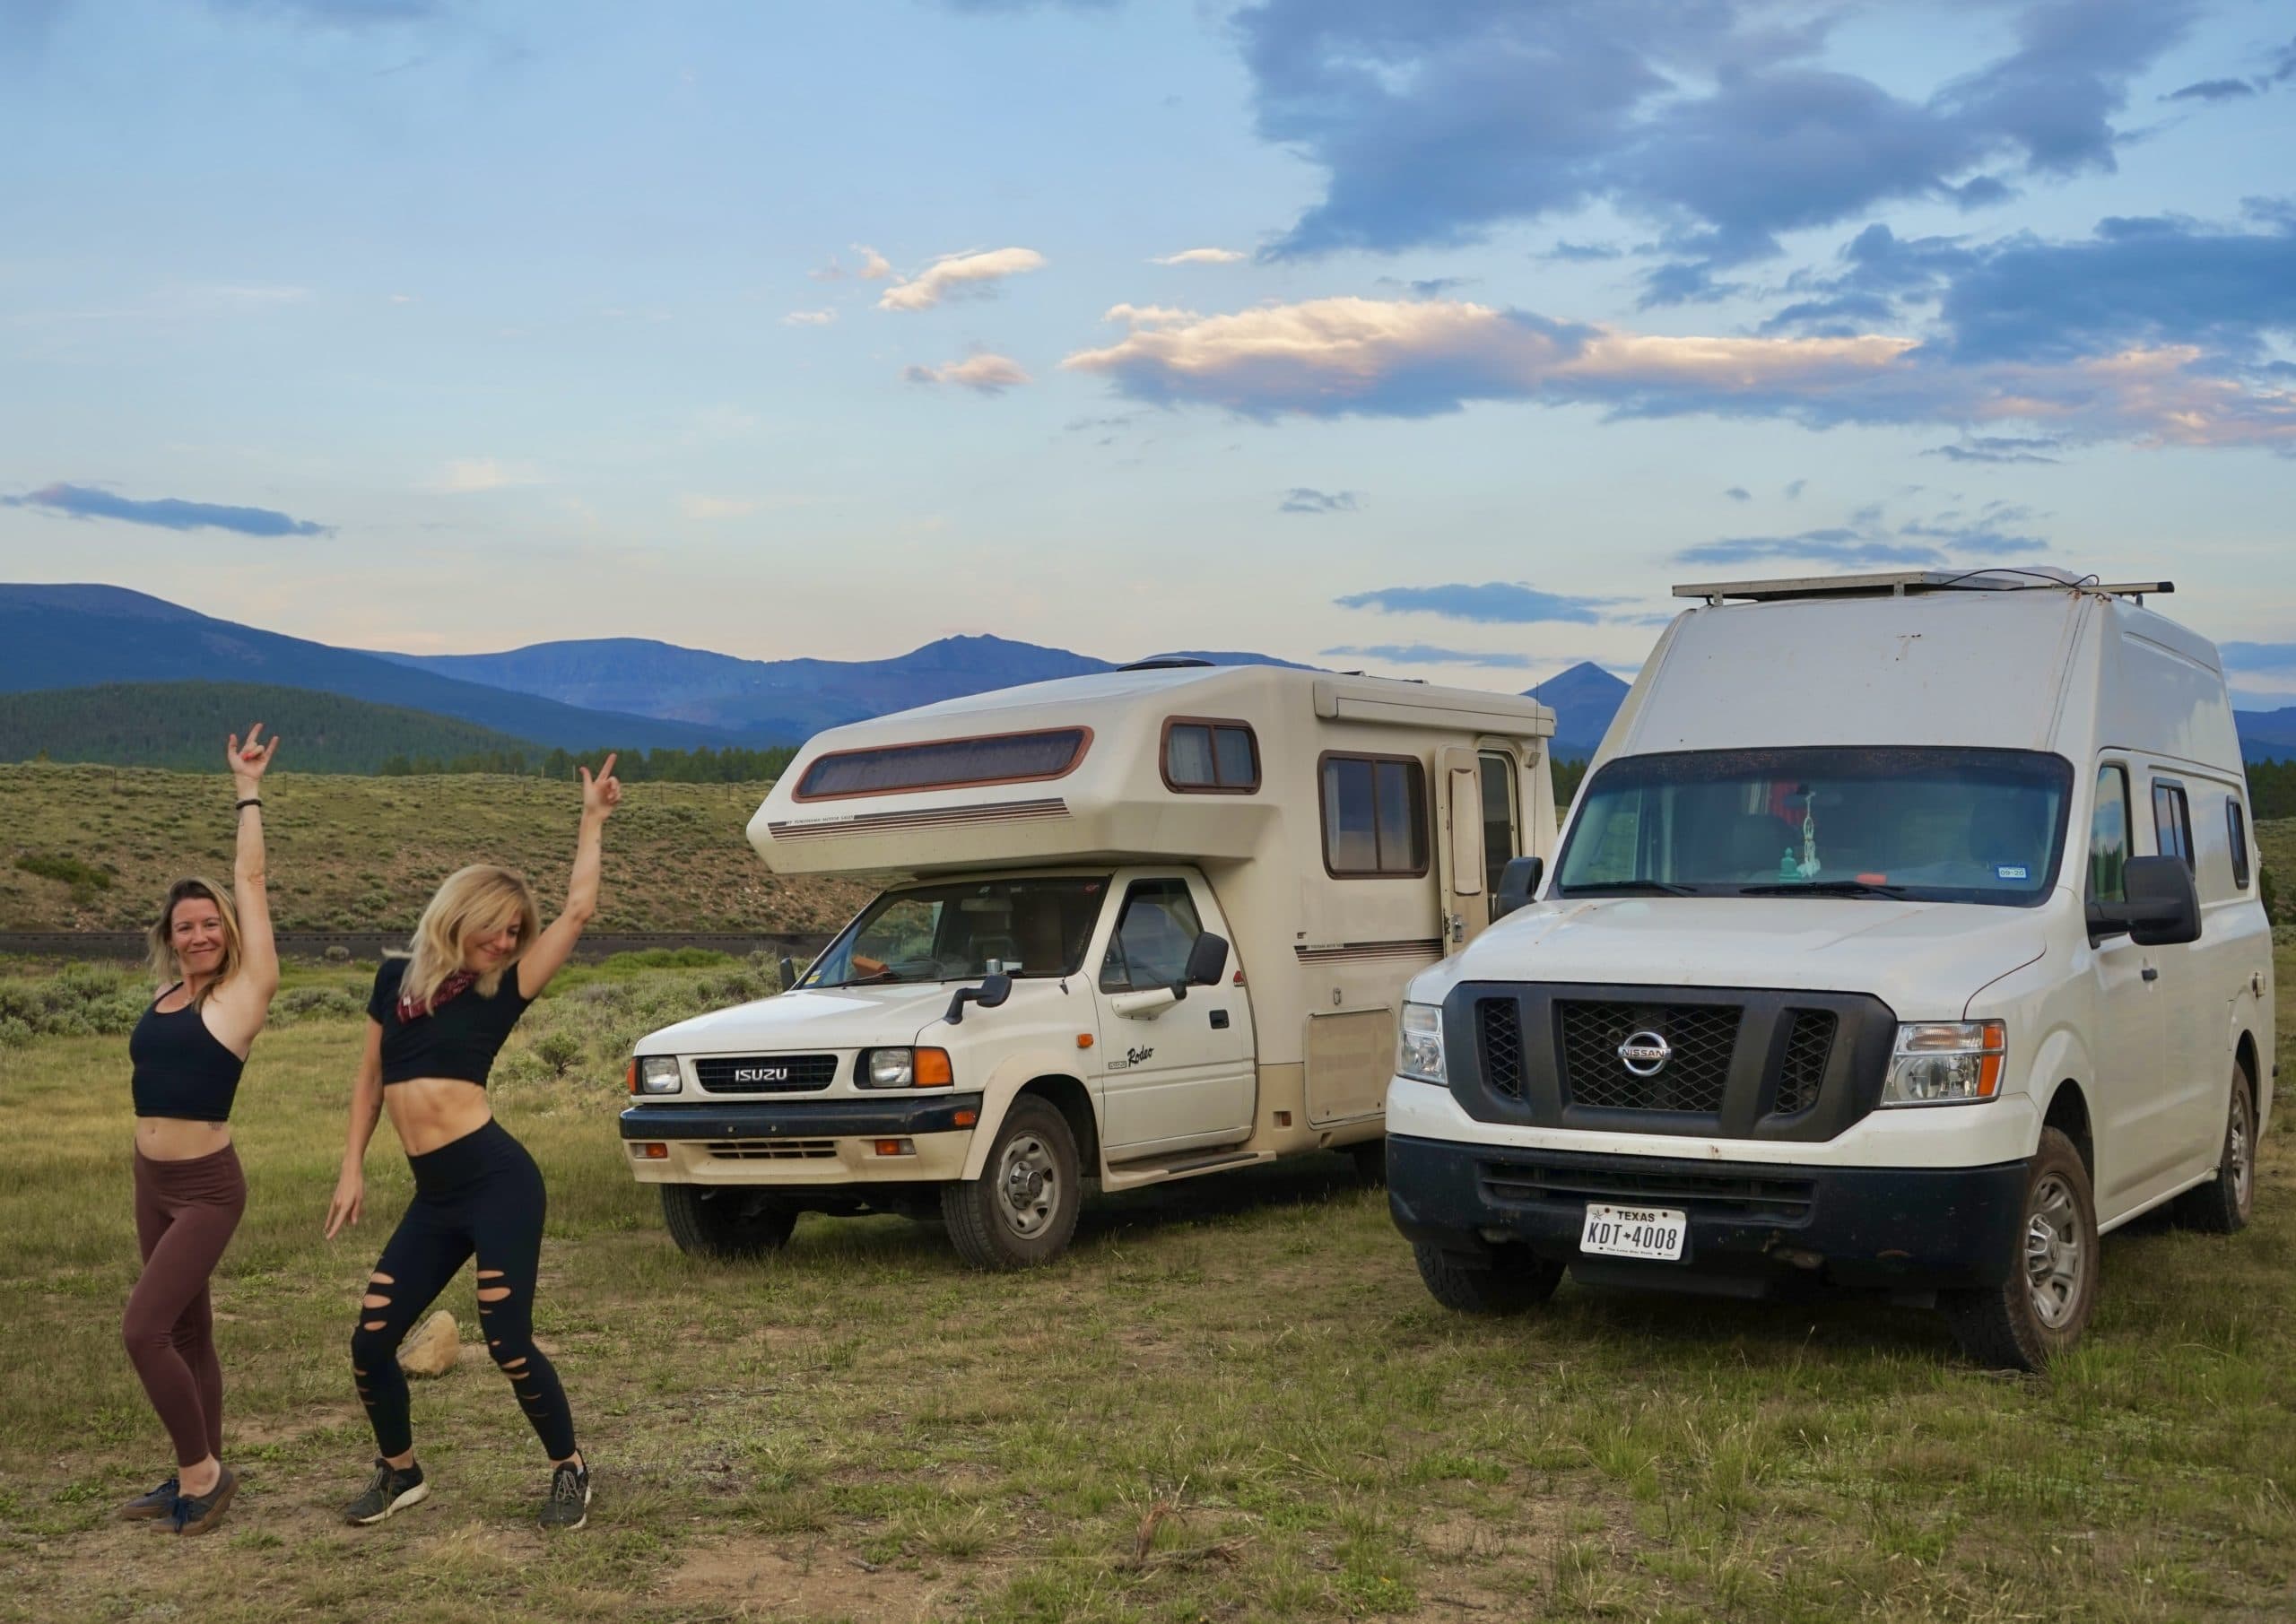 Lisa Jacobs with Her Camper Van